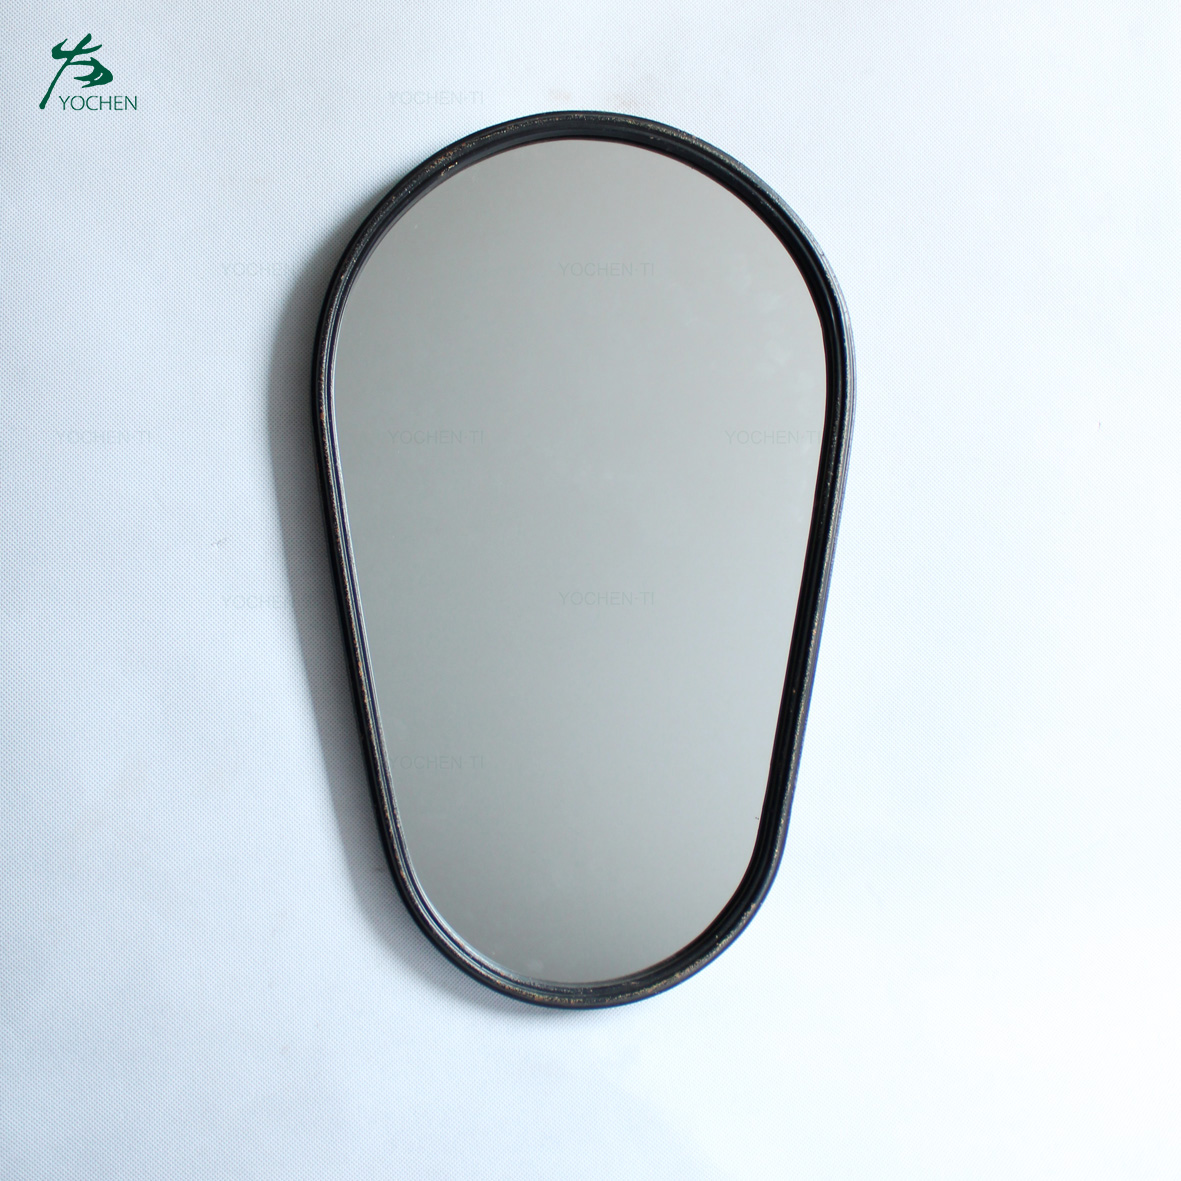 Black mirror frame wall mirror with black frame in modern design